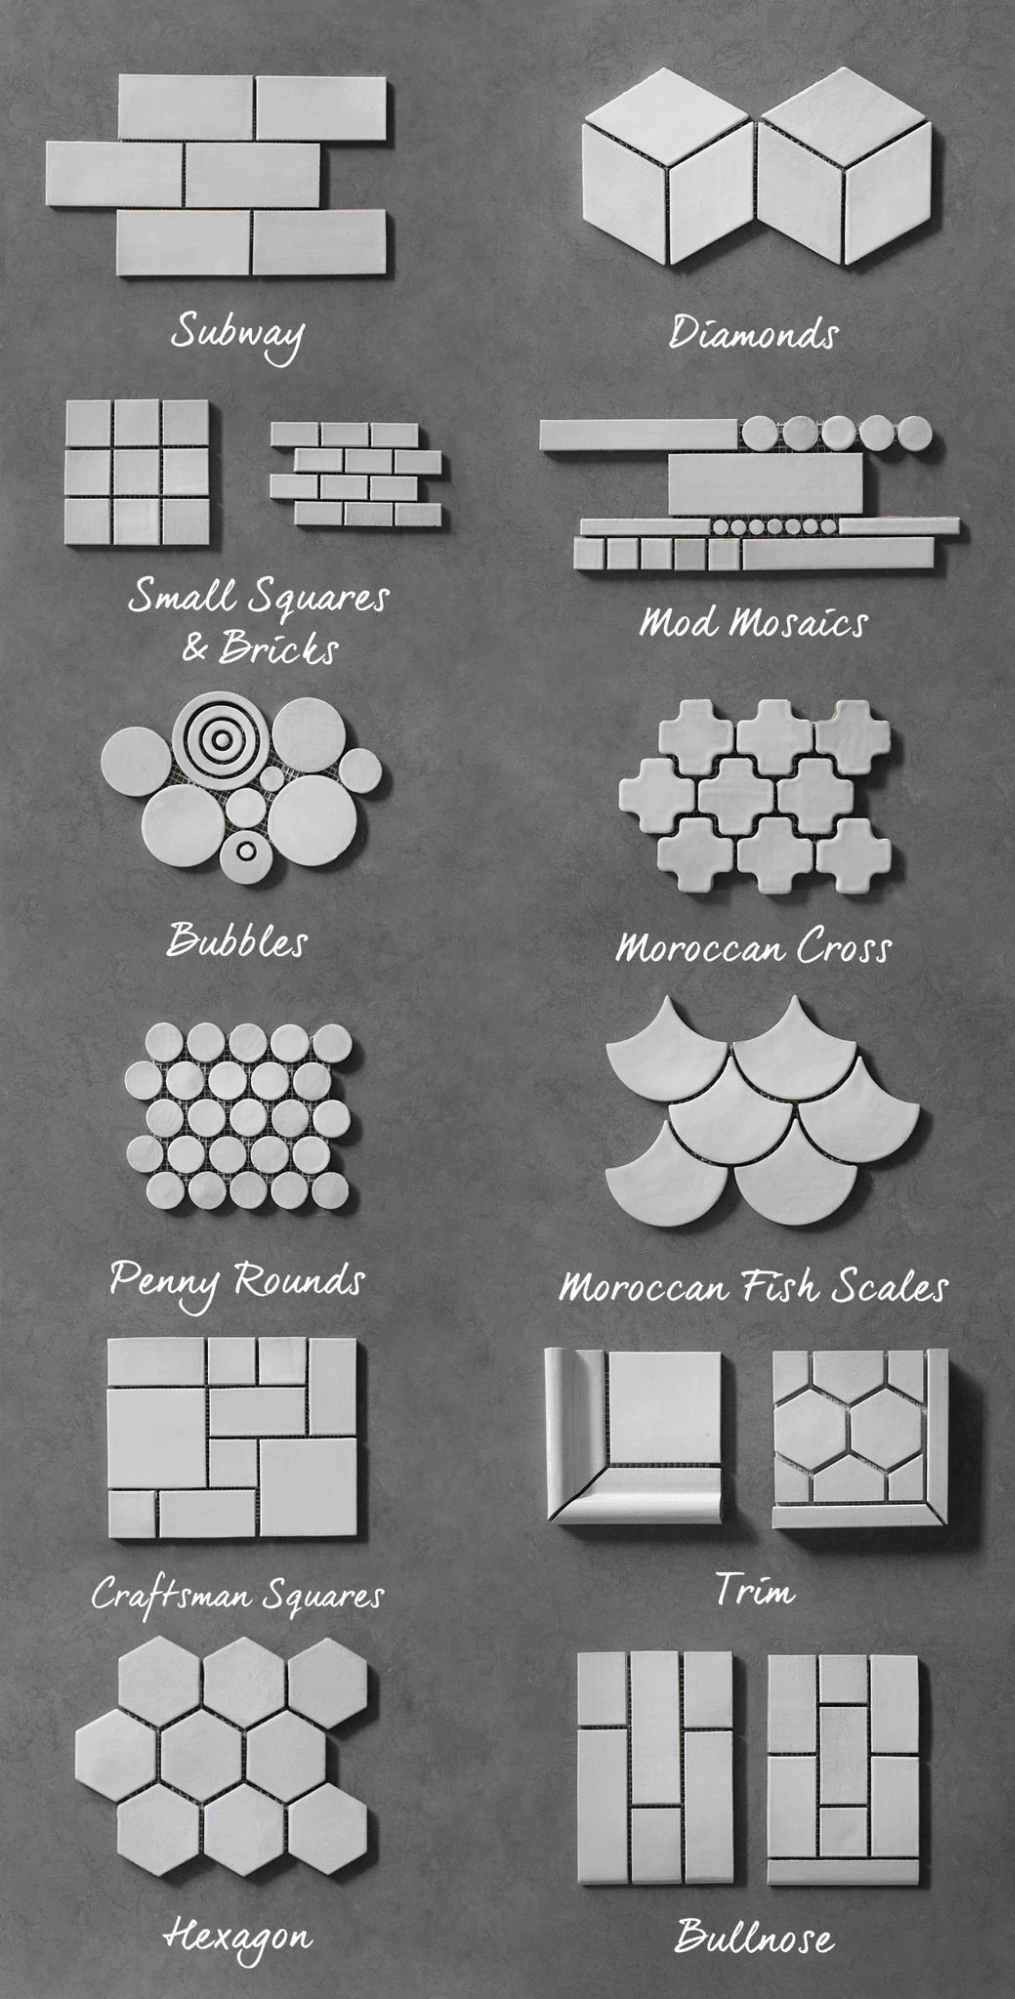 Mercury mosaics